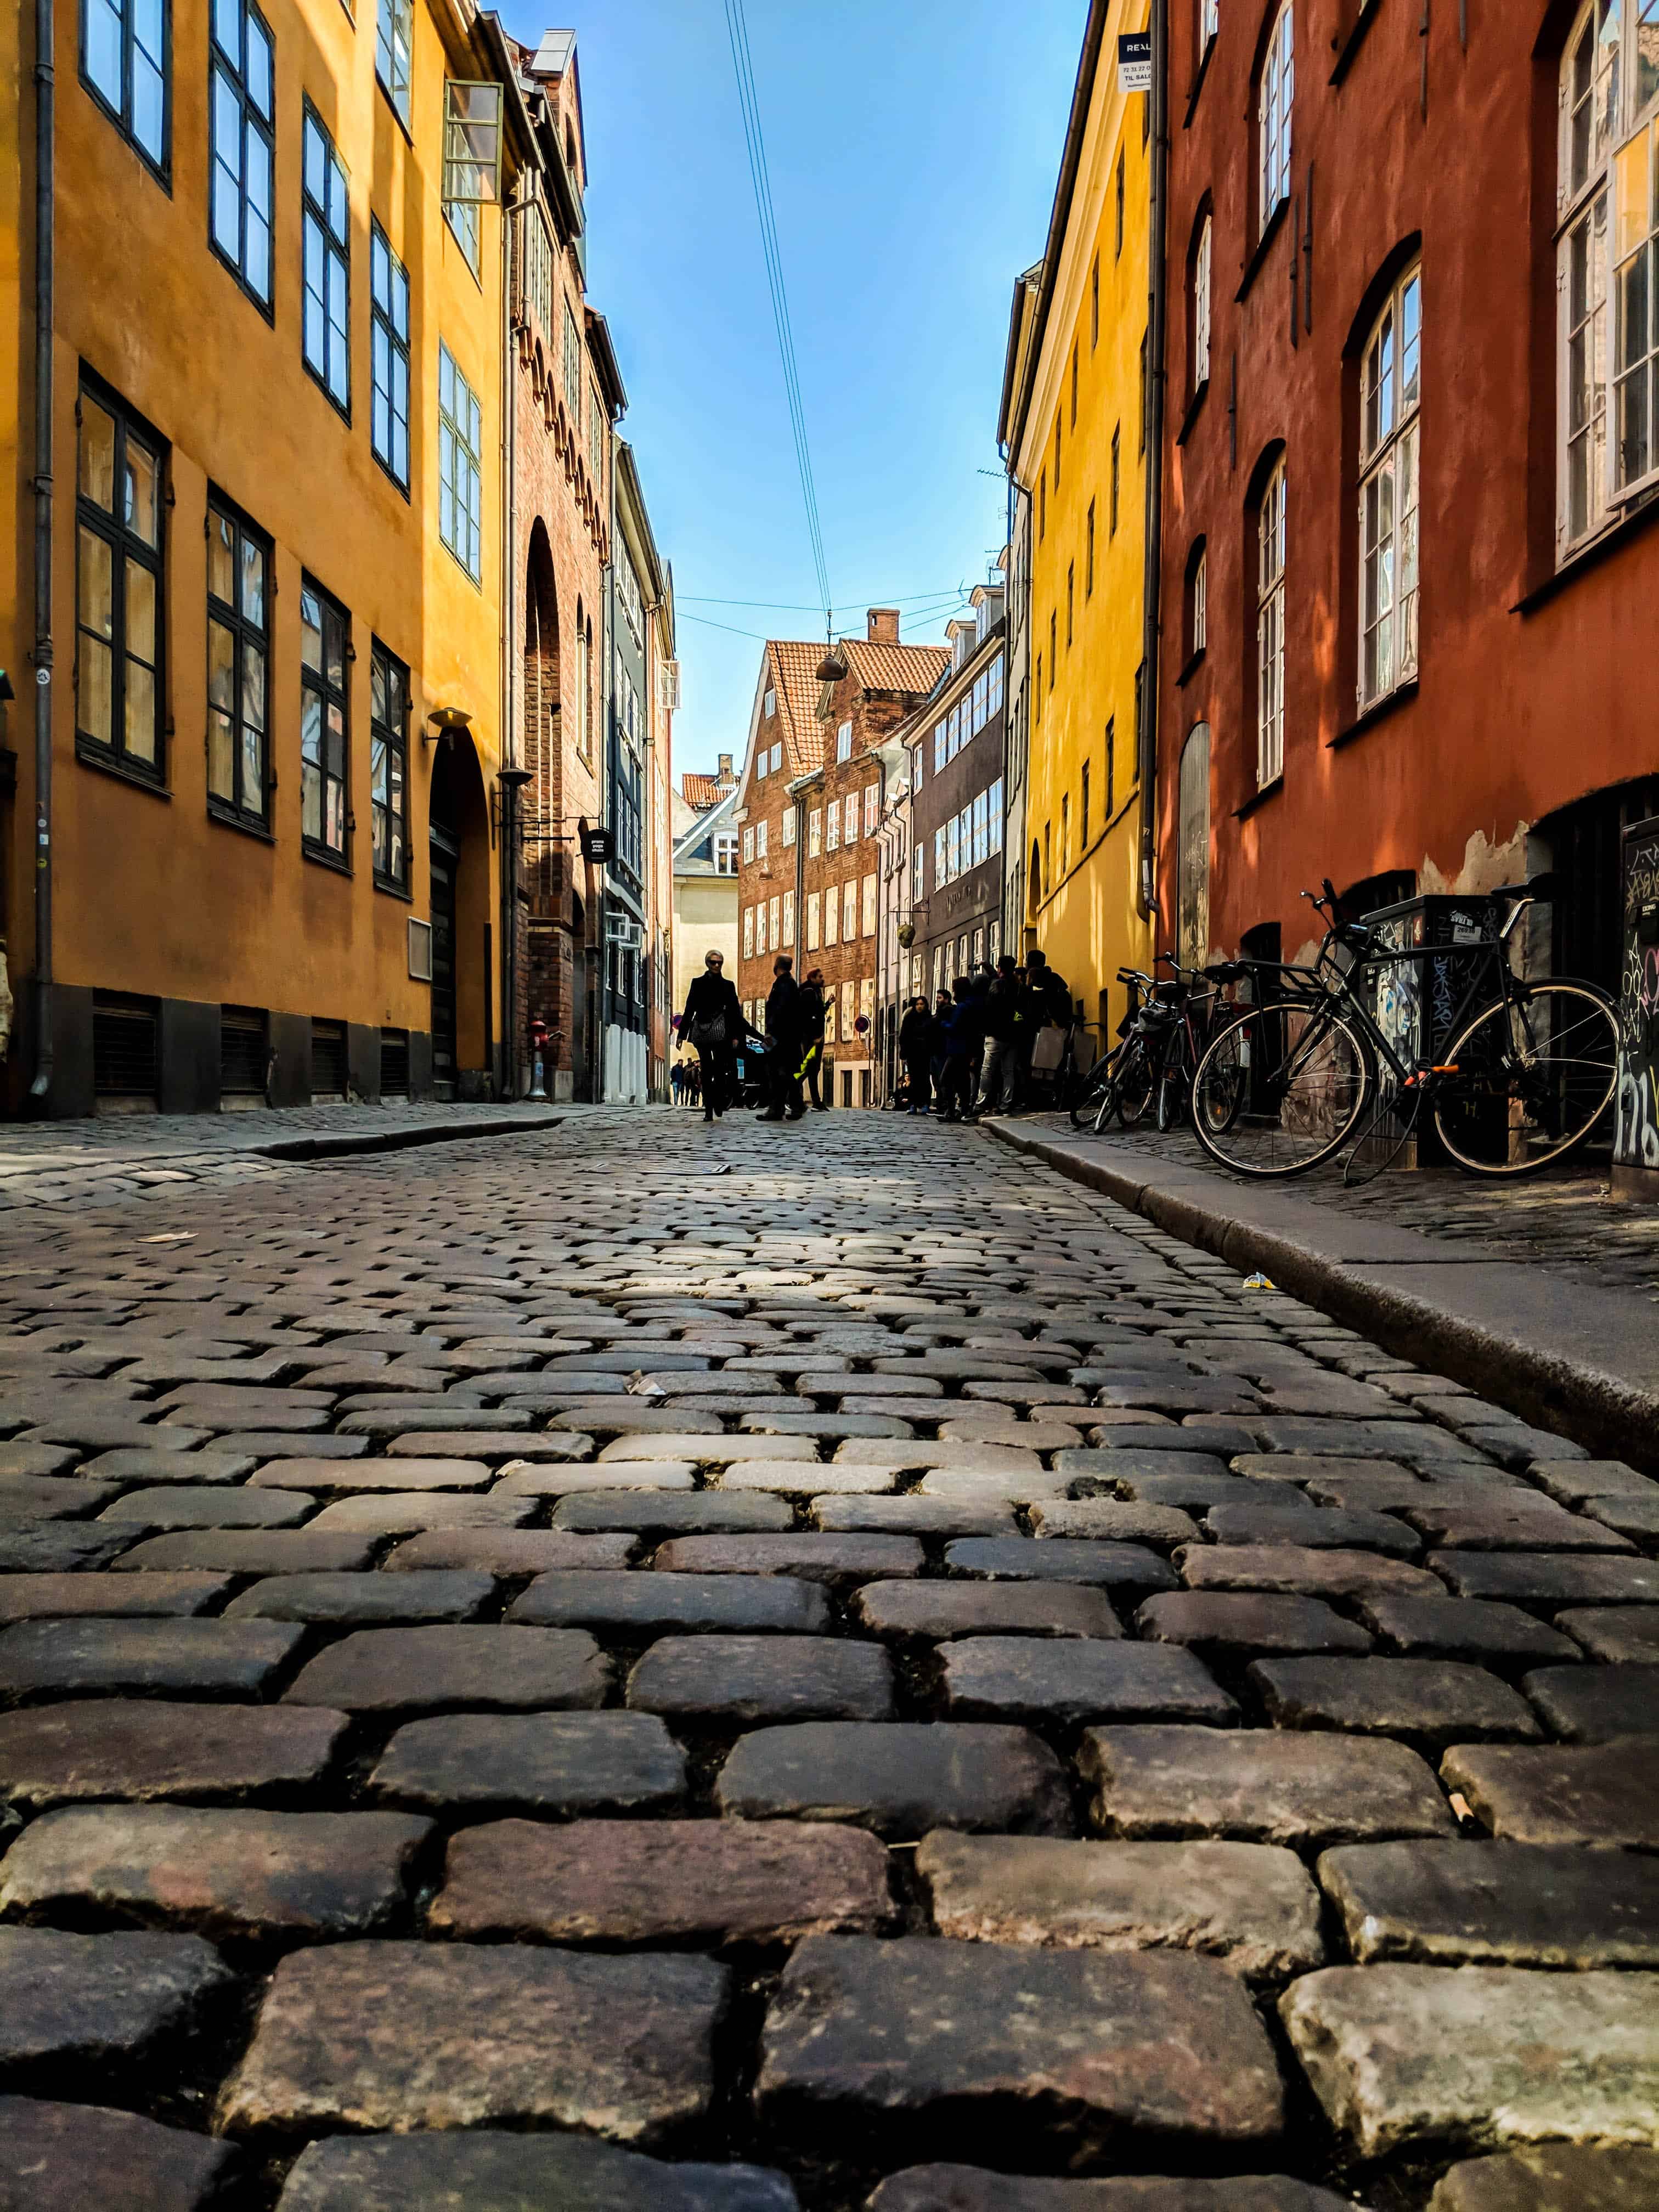 A cobblestone street in Denmark